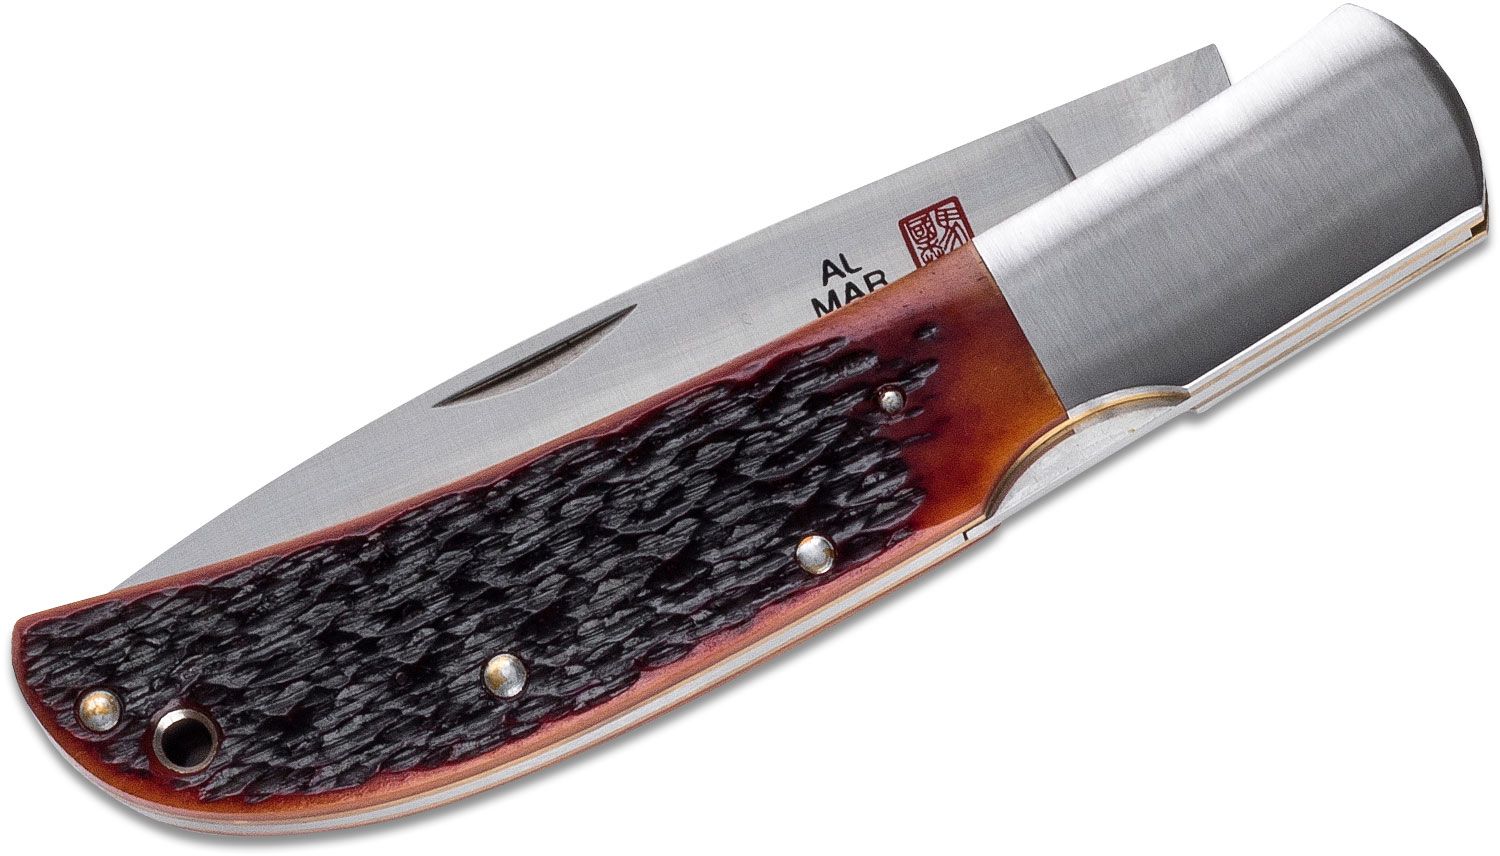 Al Mar Japan 1005HJB Eagle Classic Folding Knife 4